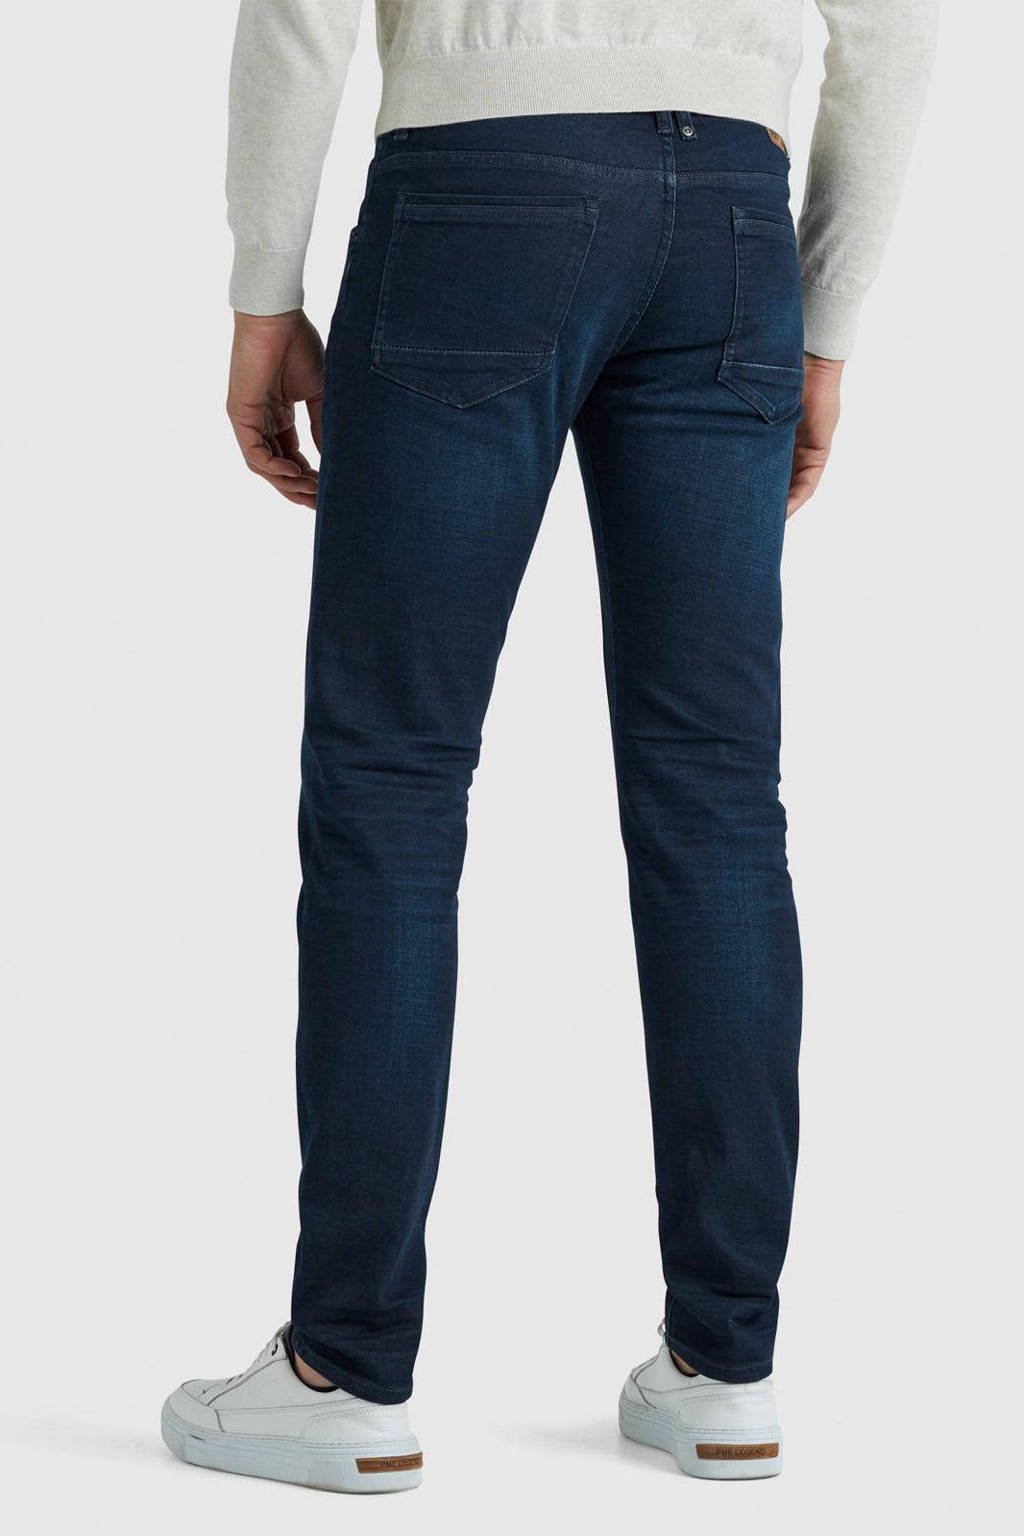 wehkamp Legend | slim dds Tailwheel PME fit jeans